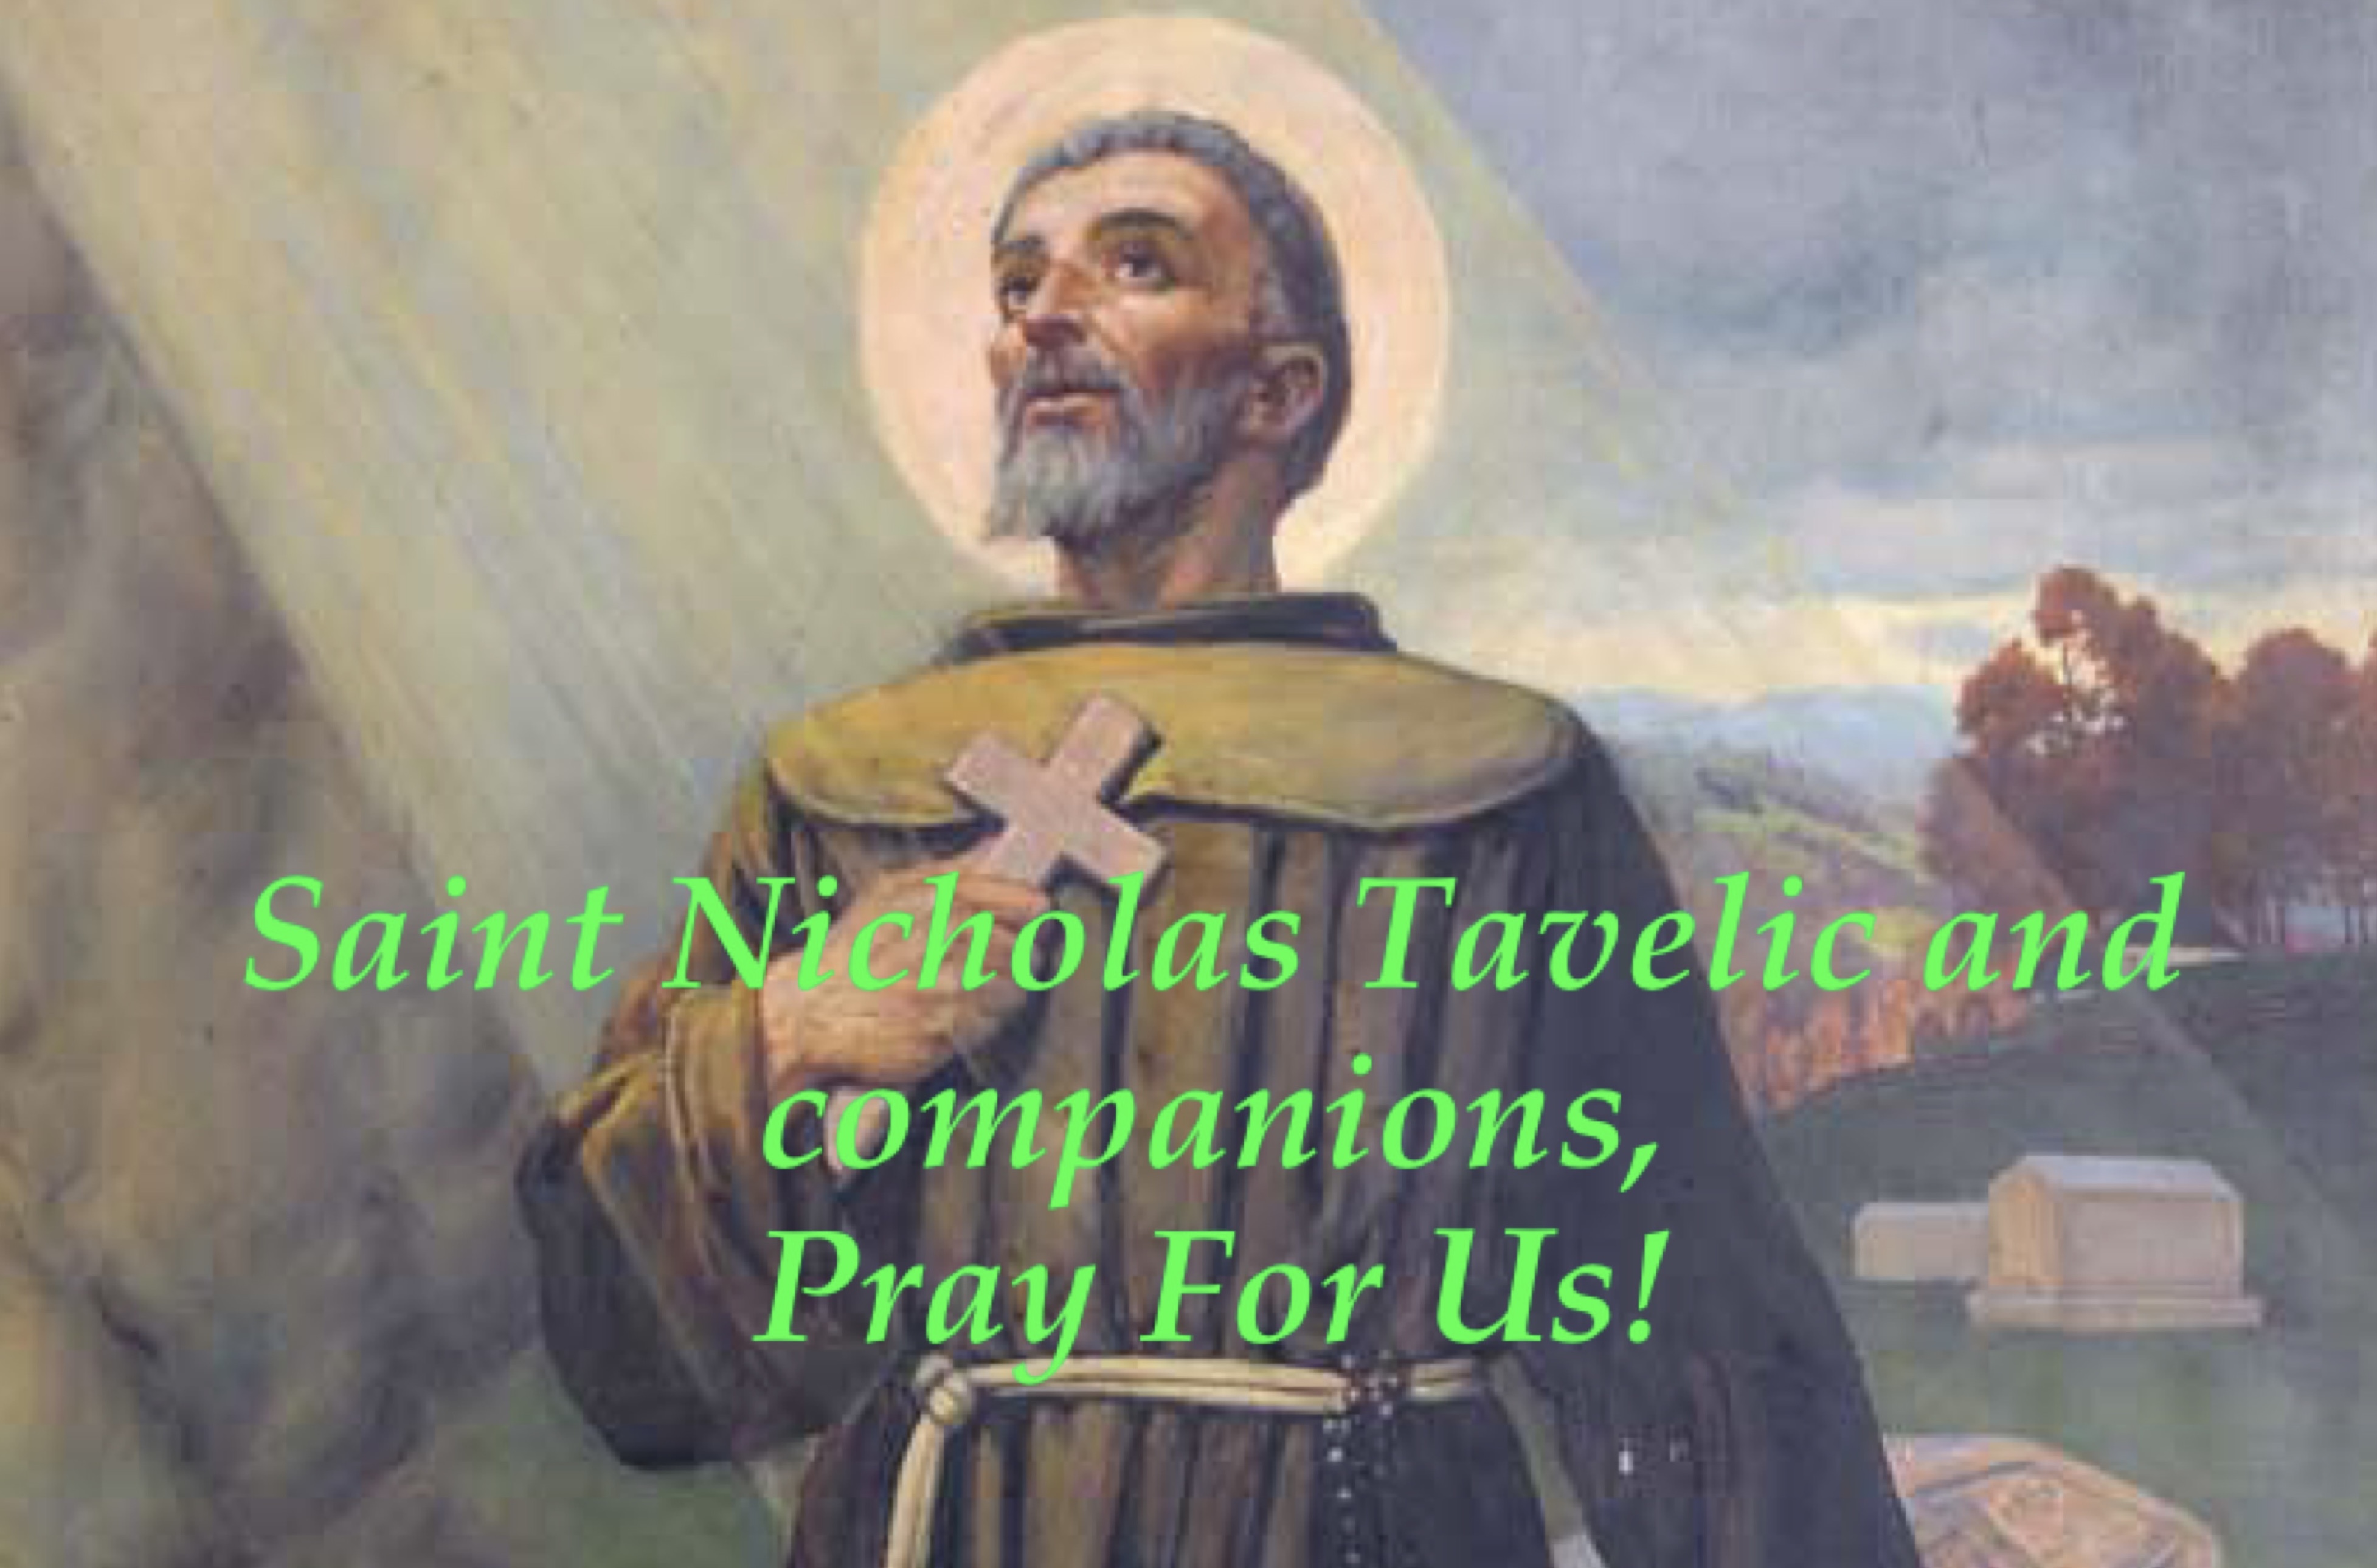 6th November - Saint Nicholas Tavelic and companions